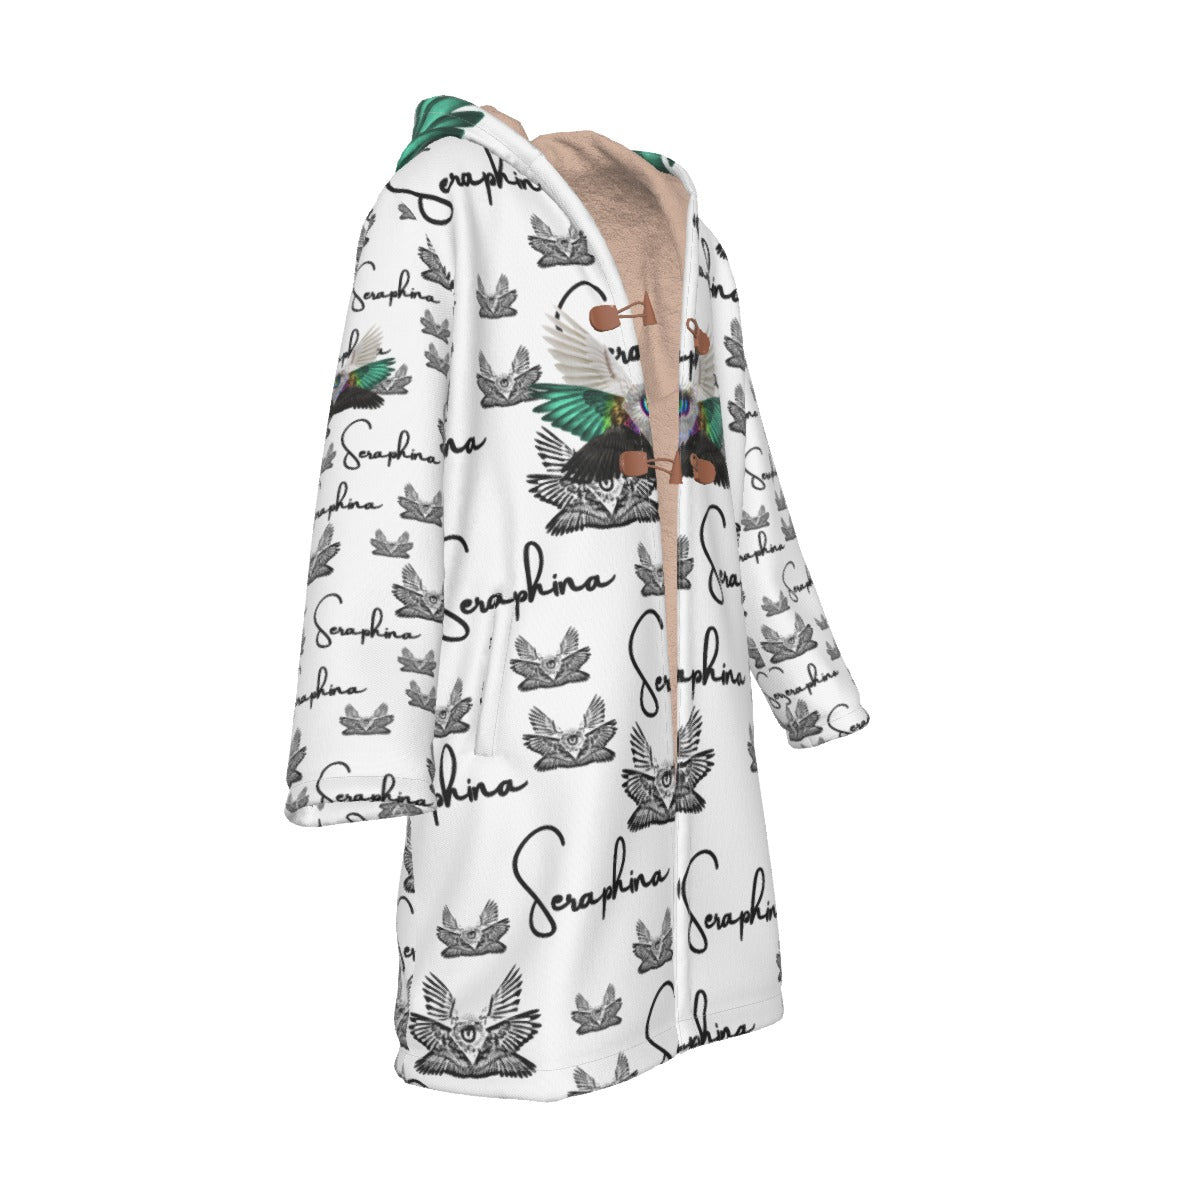 Enlightened Owl Hooded Cloak Festival Blanket Jacket